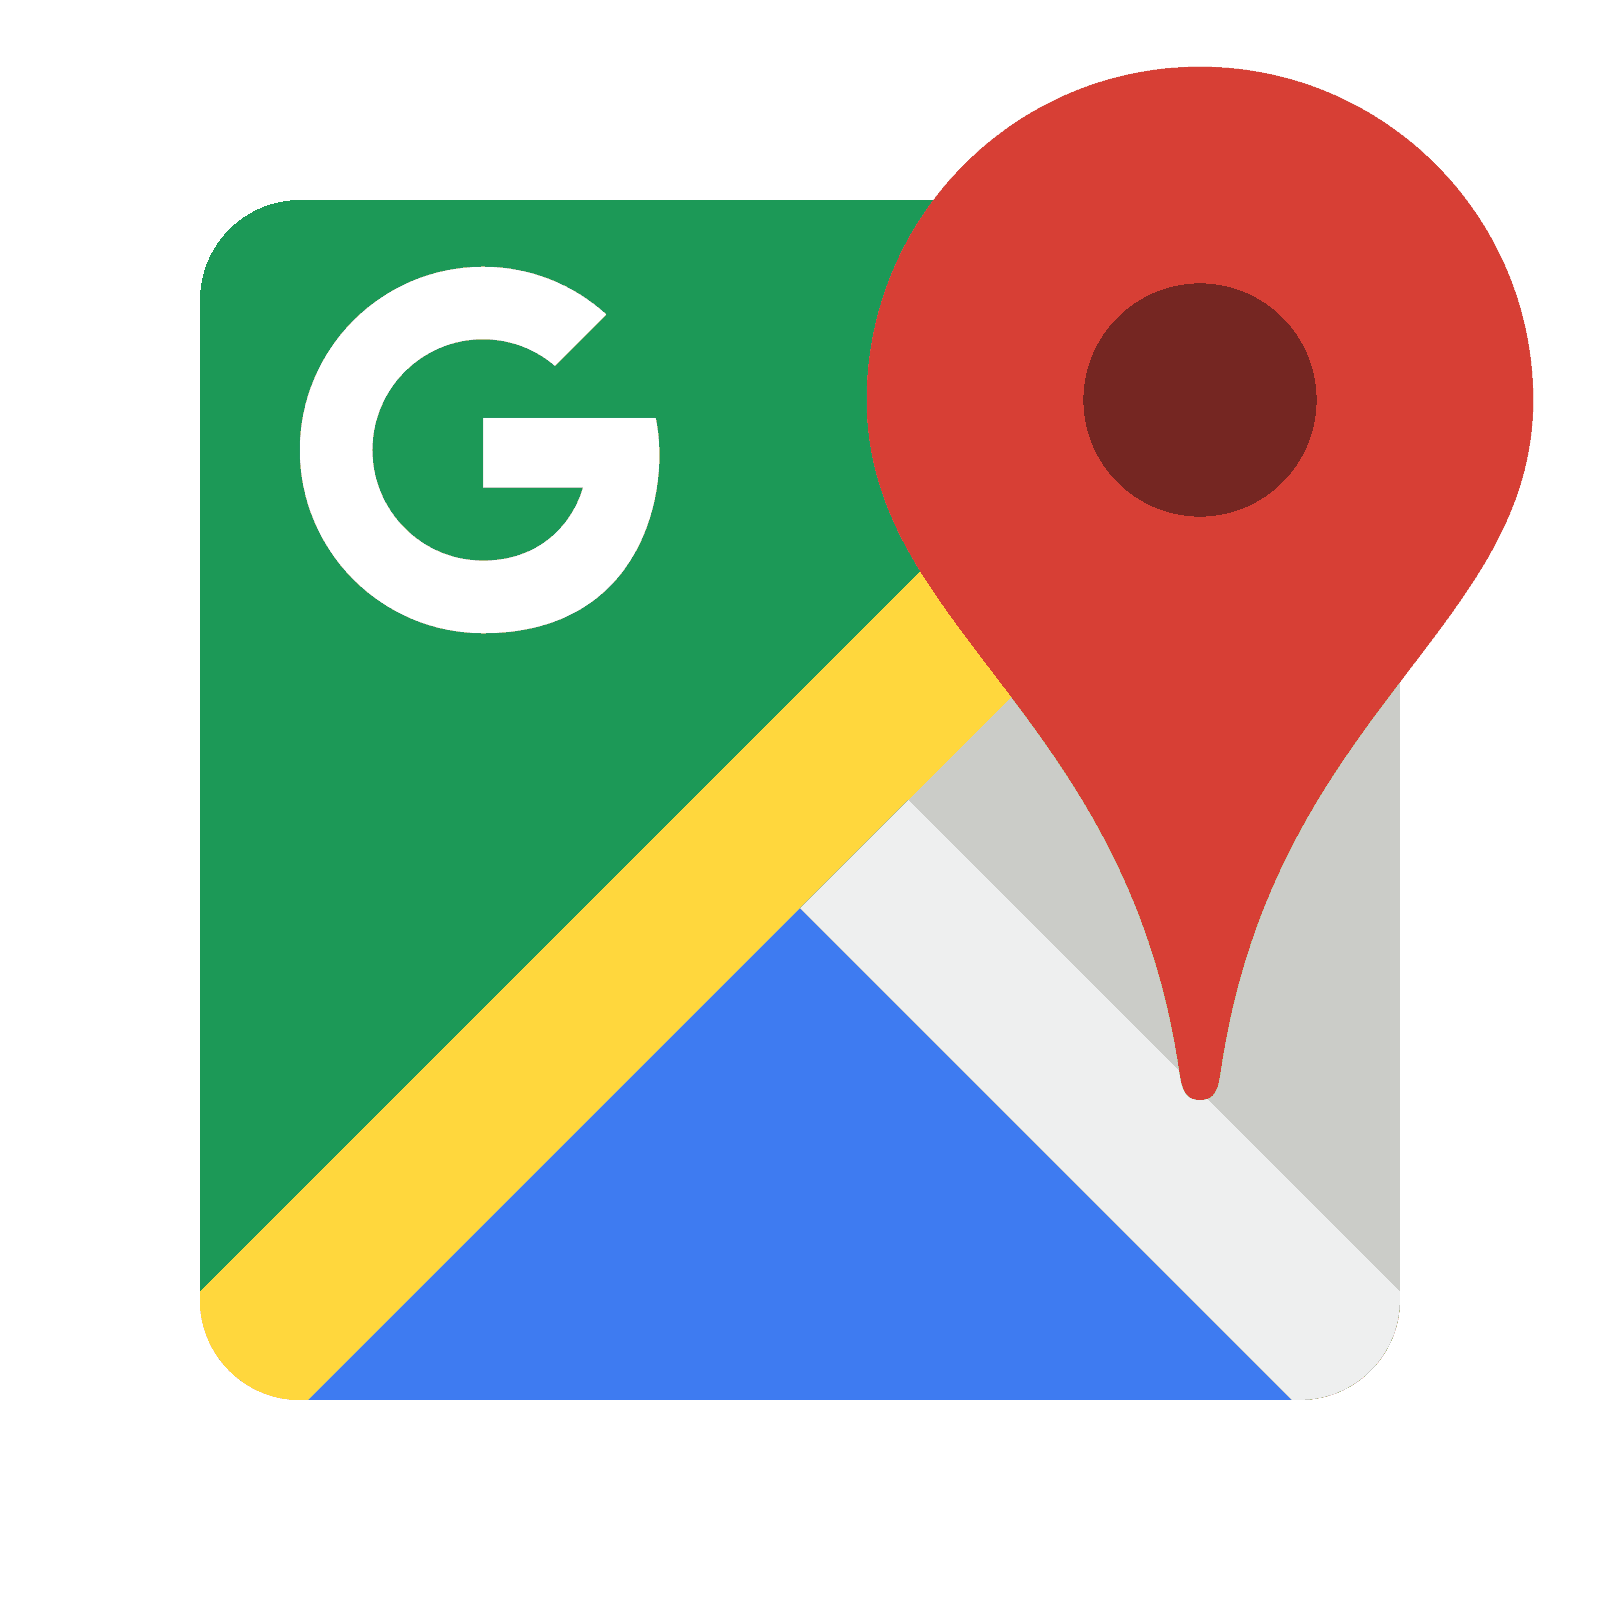 Portable Air on Google Maps